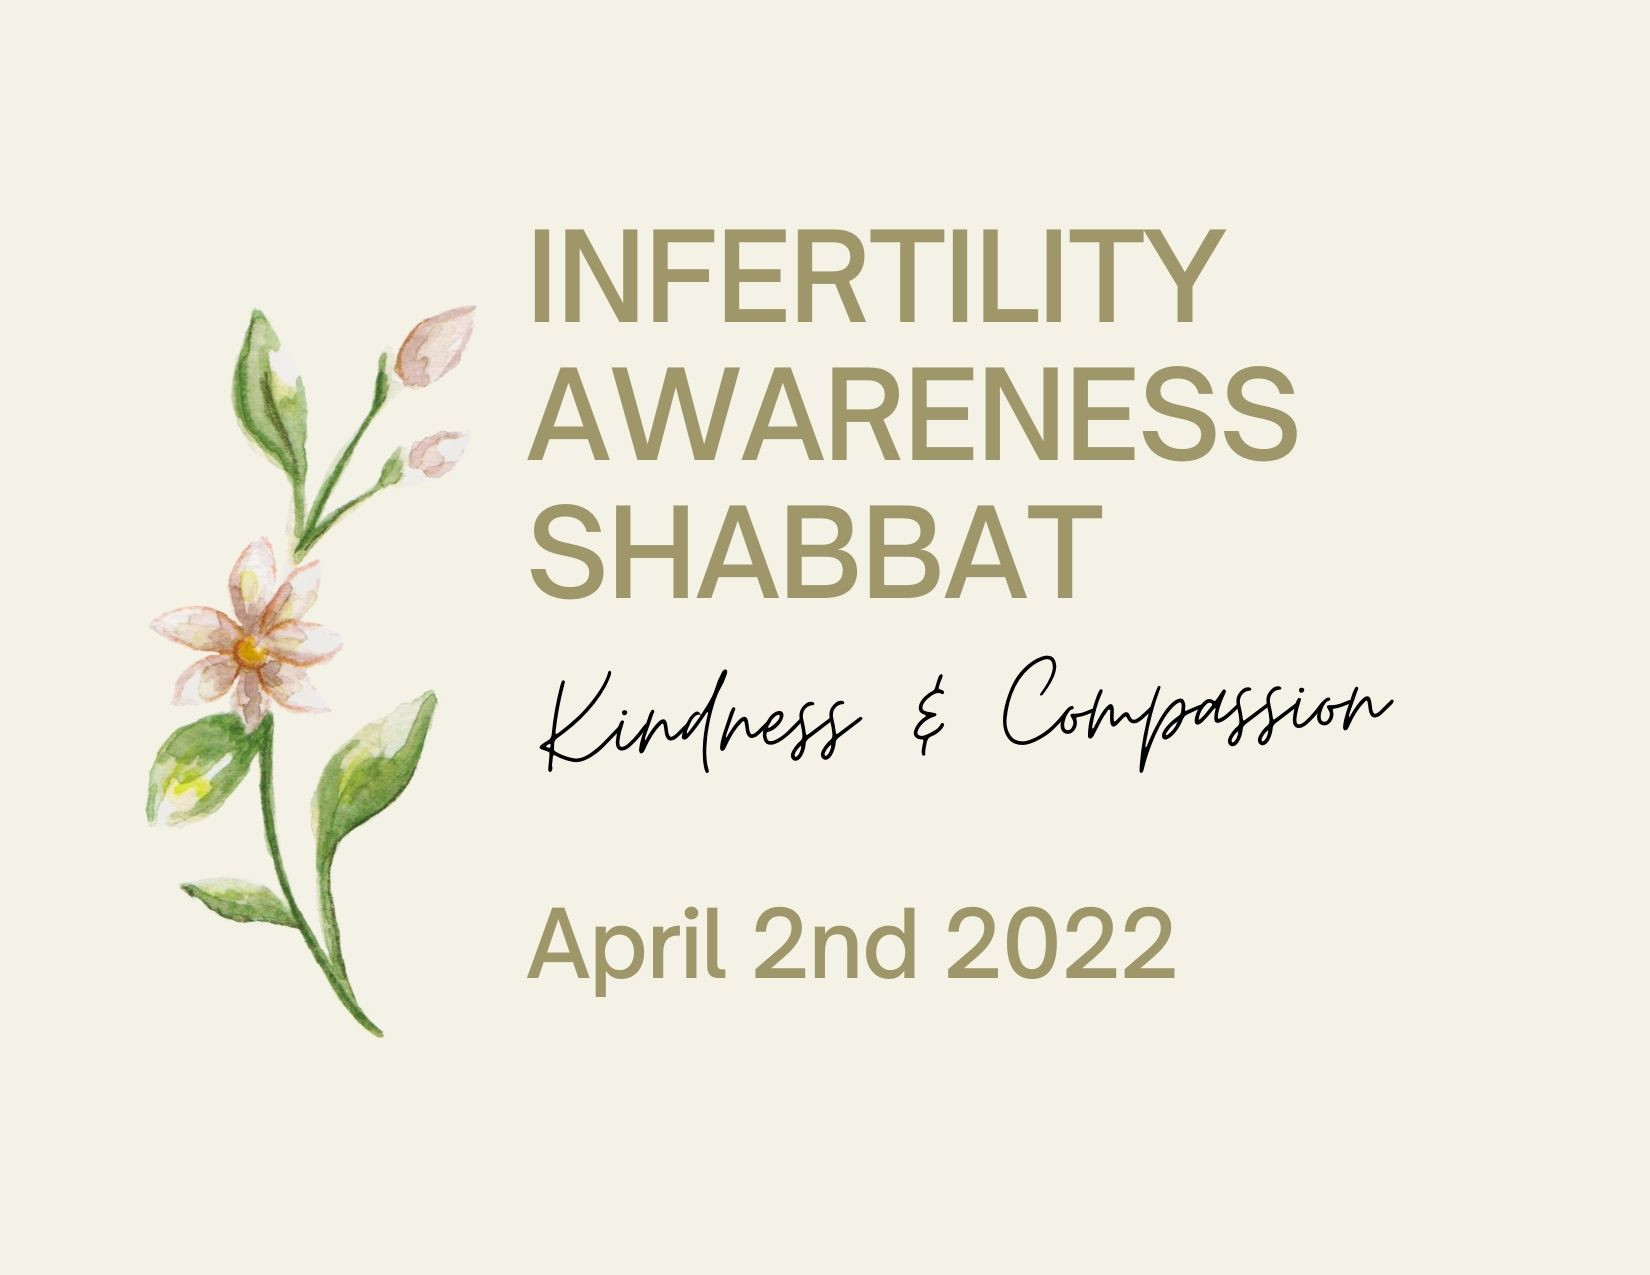 Awareness of Infertility Shabbat